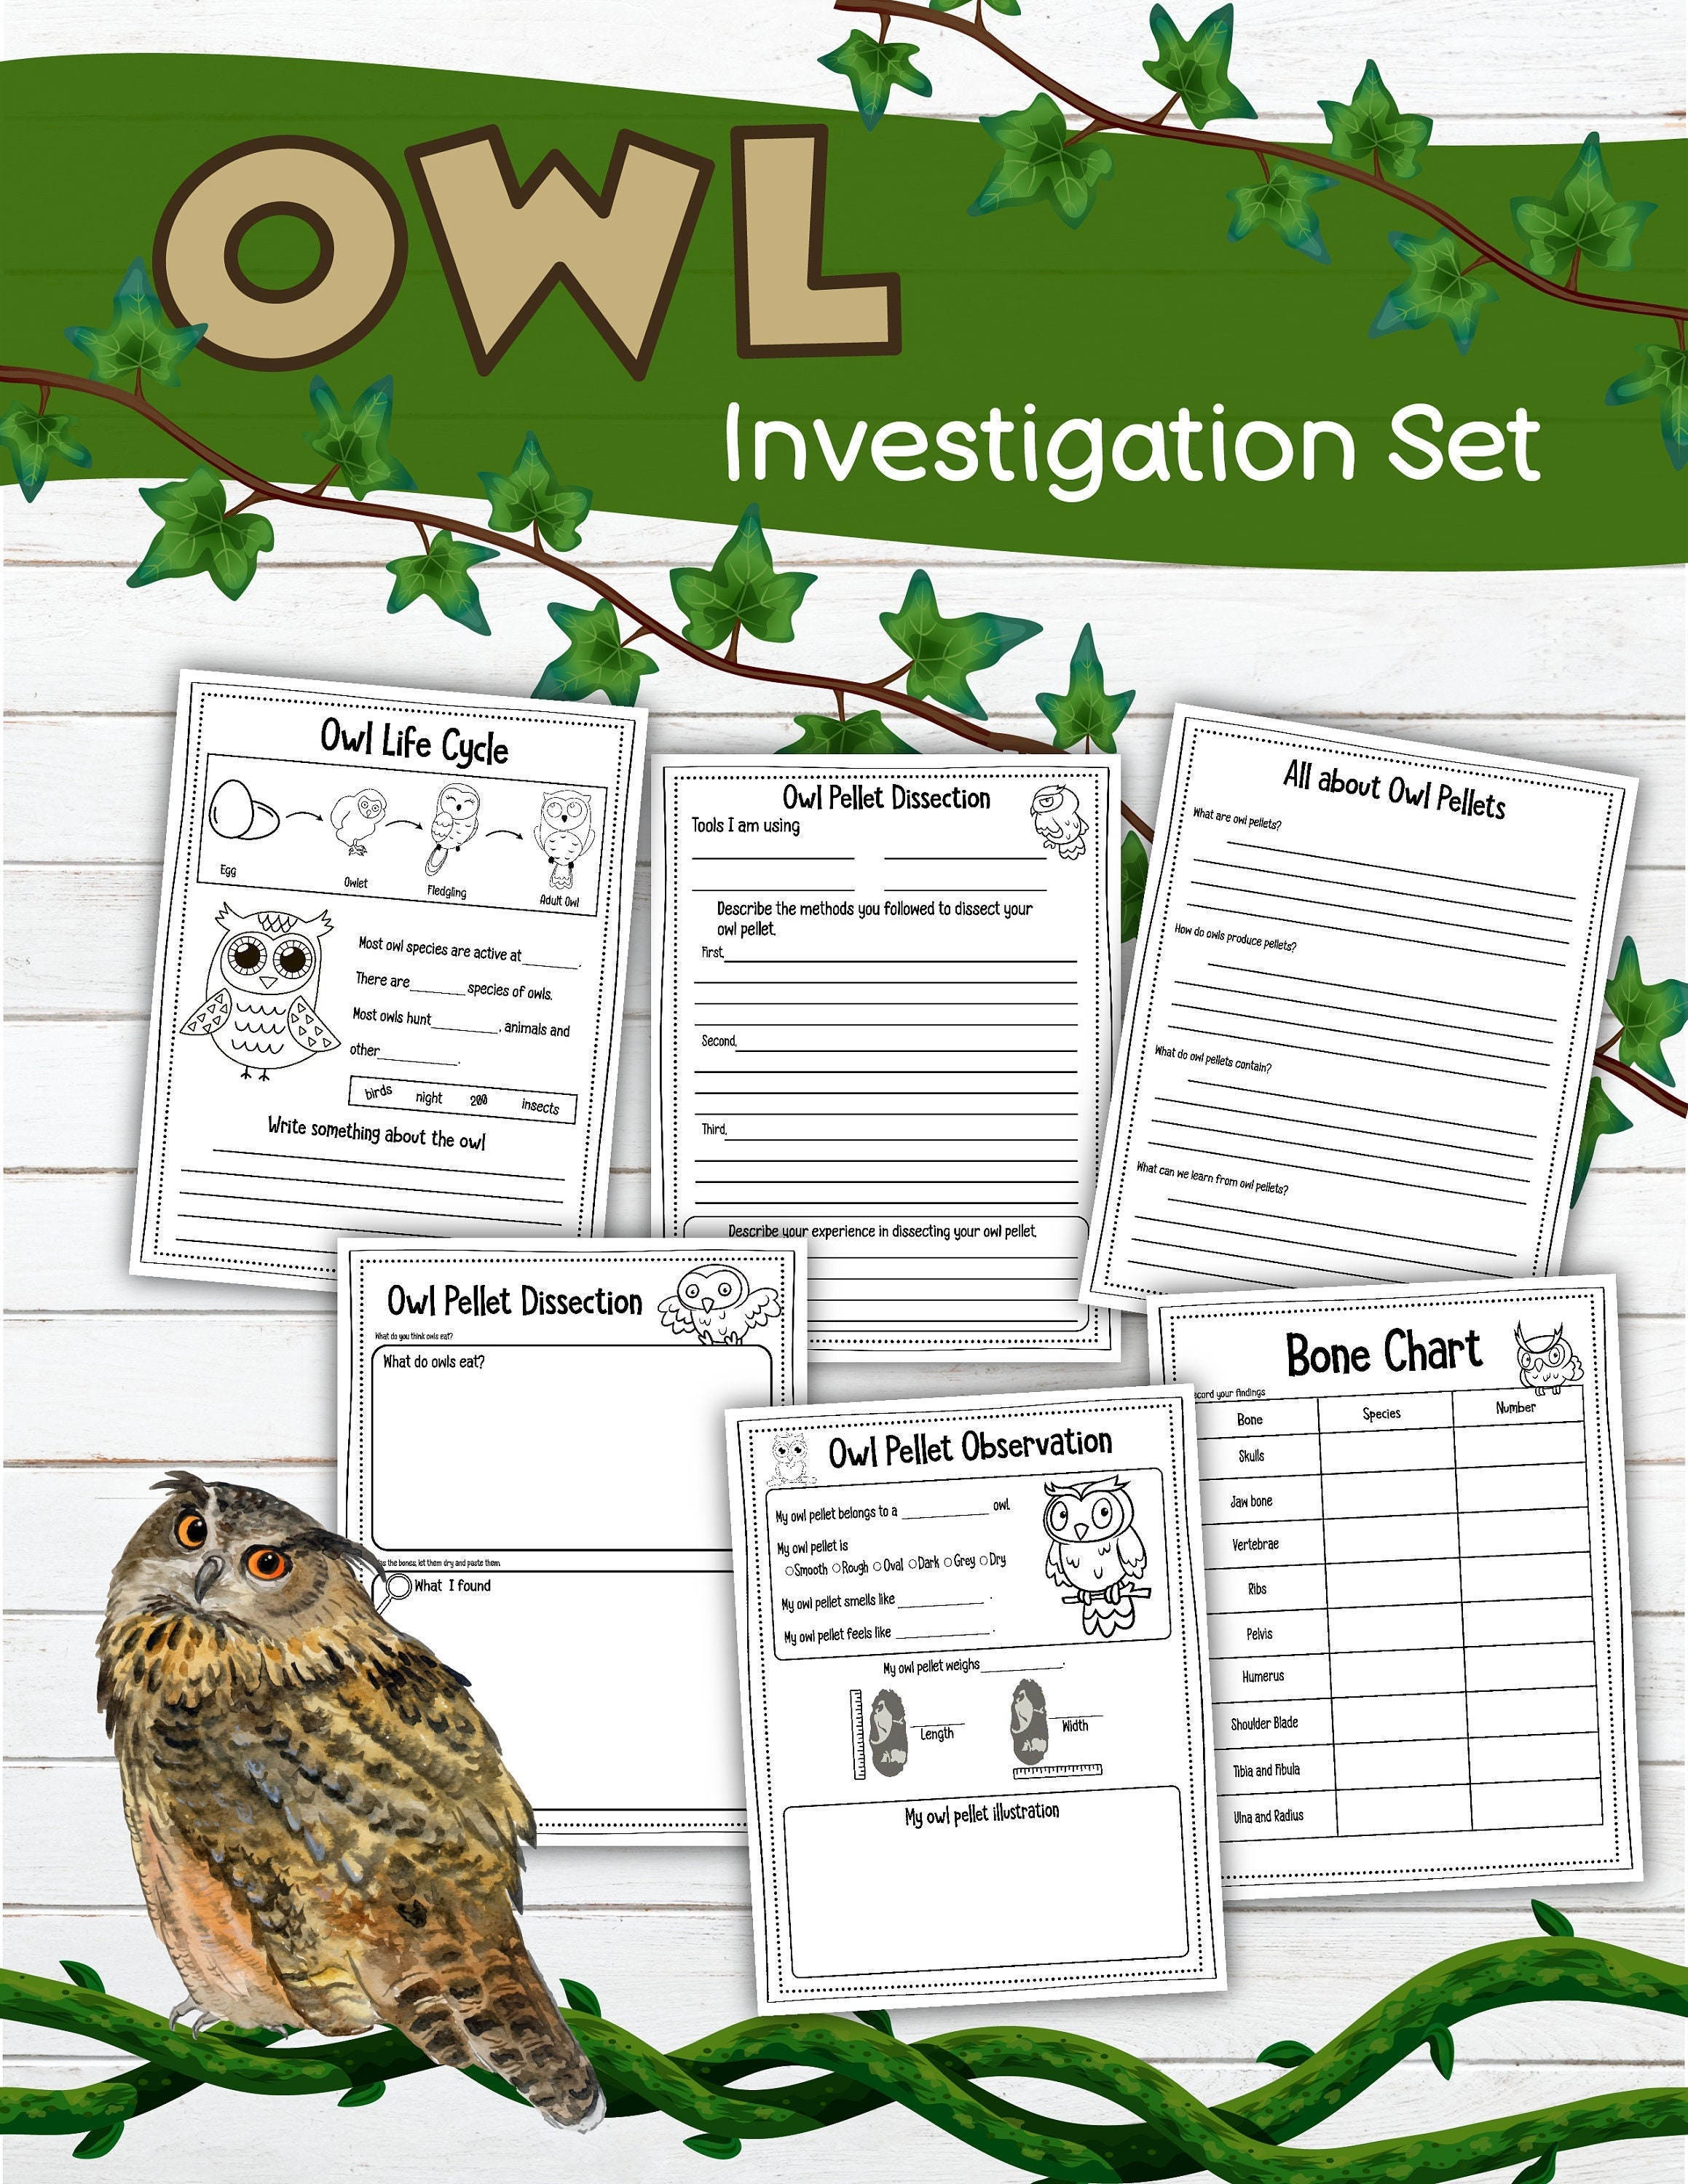 Owl Pellets Dissection Kit 